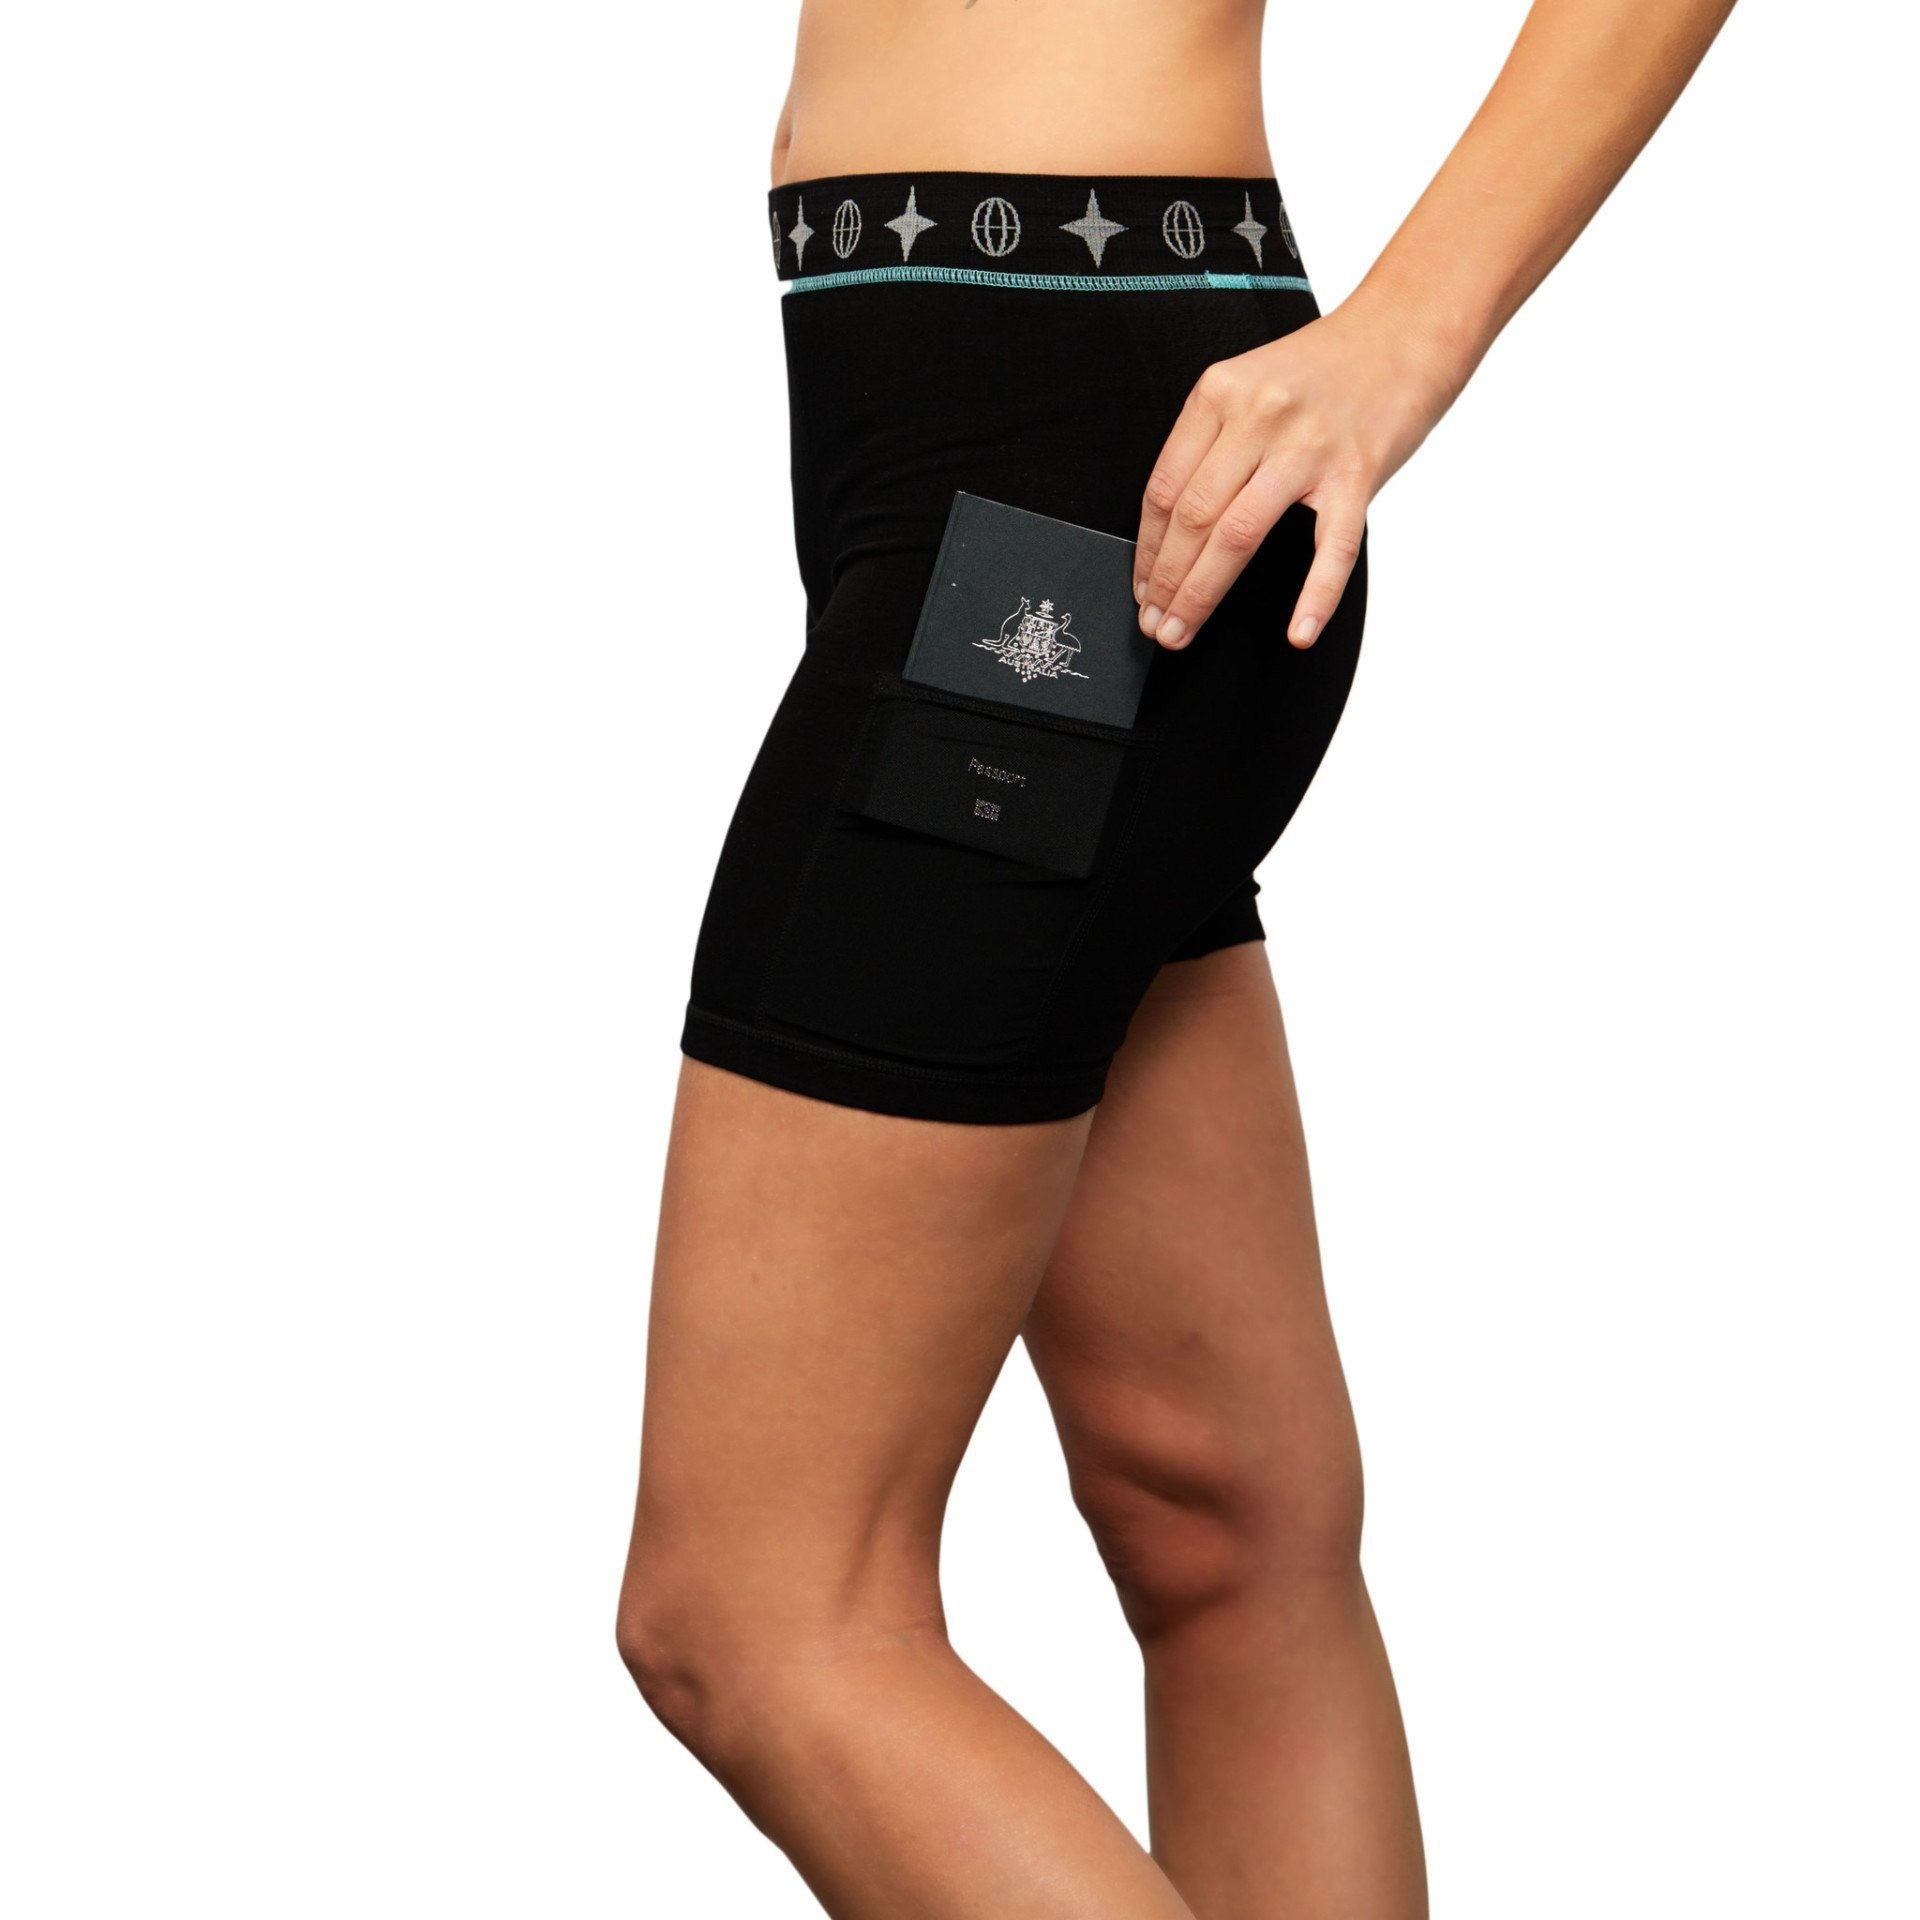 LUEXBOX Pocket Pantie for Women, Travel Underwear with Secret